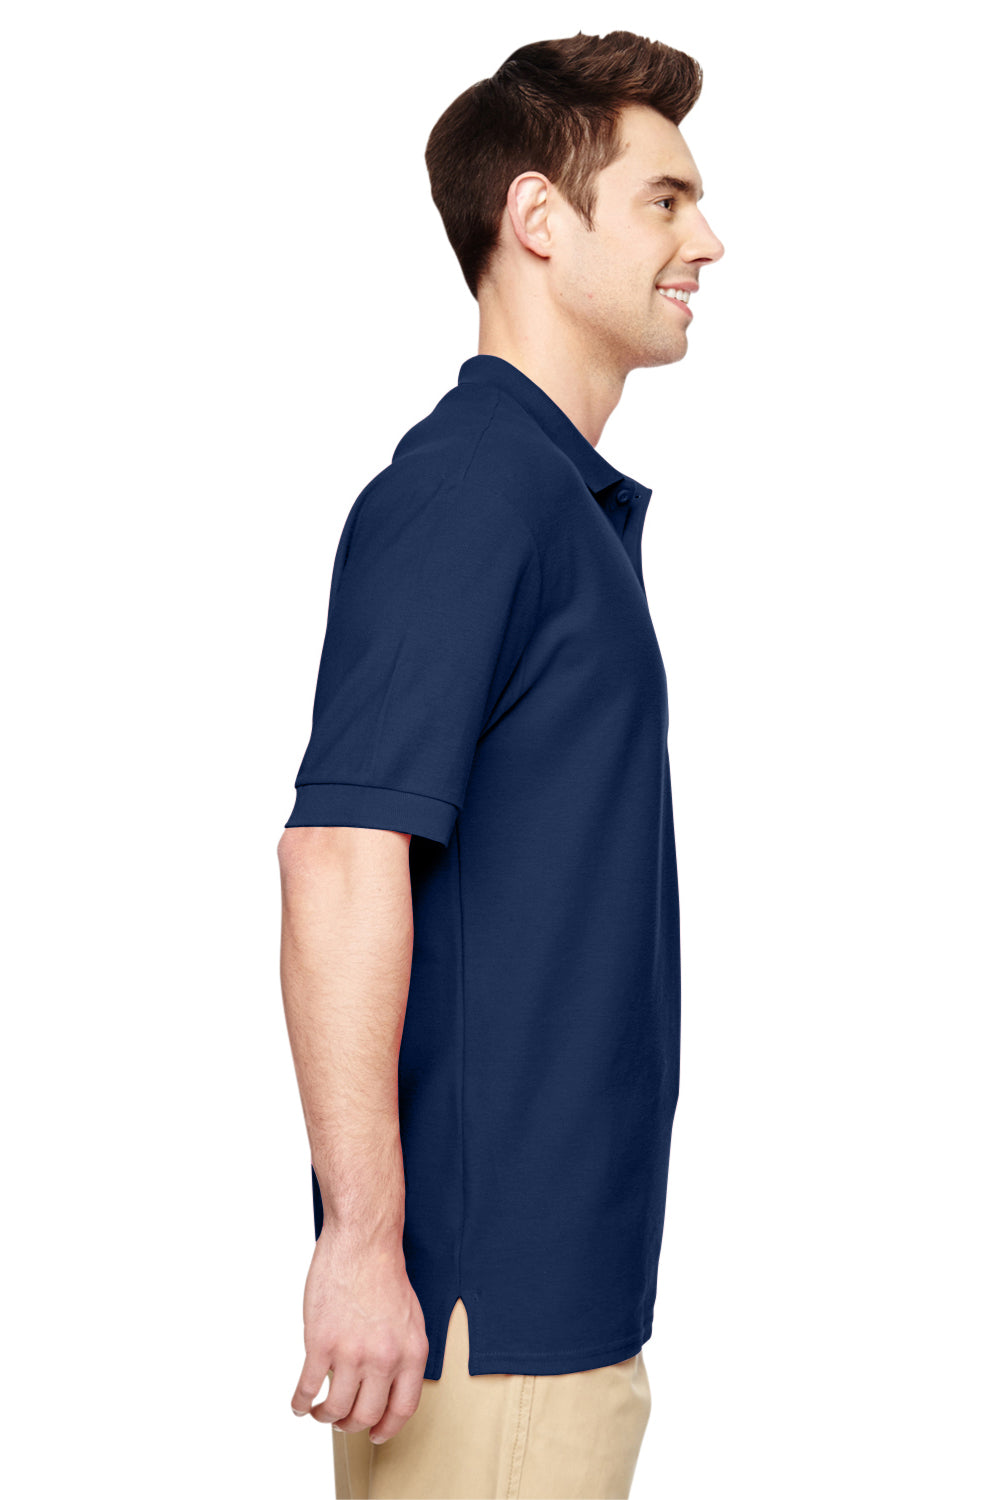 Gildan G828 Mens Short Sleeve Polo Shirt Navy Blue Side